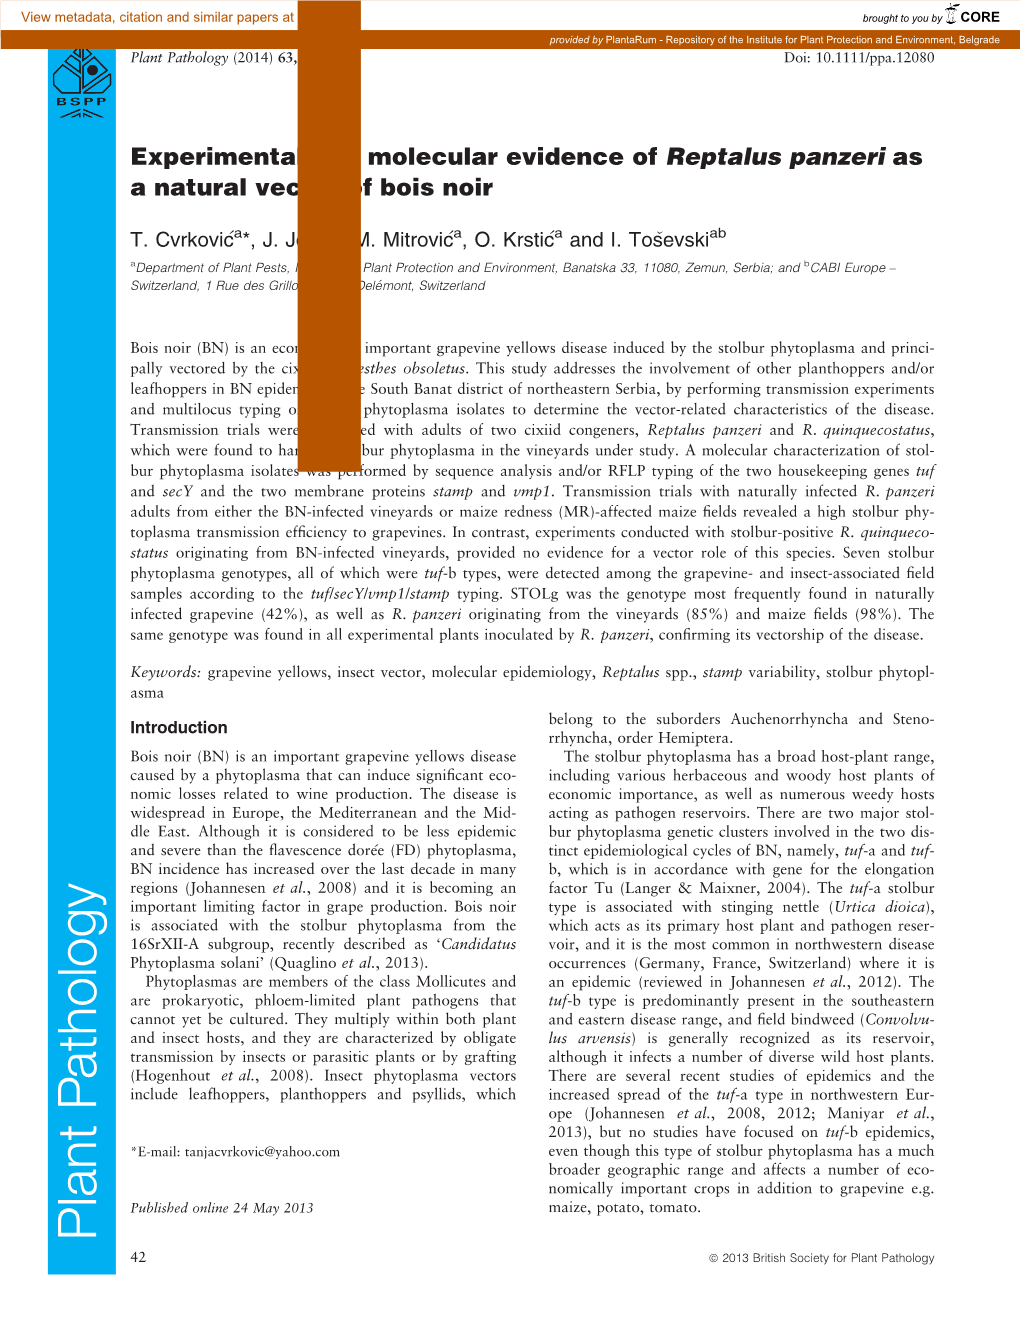 Experimental and Molecular Evidence of Reptalus Panzeri As a Natural Vector of Bois Noir